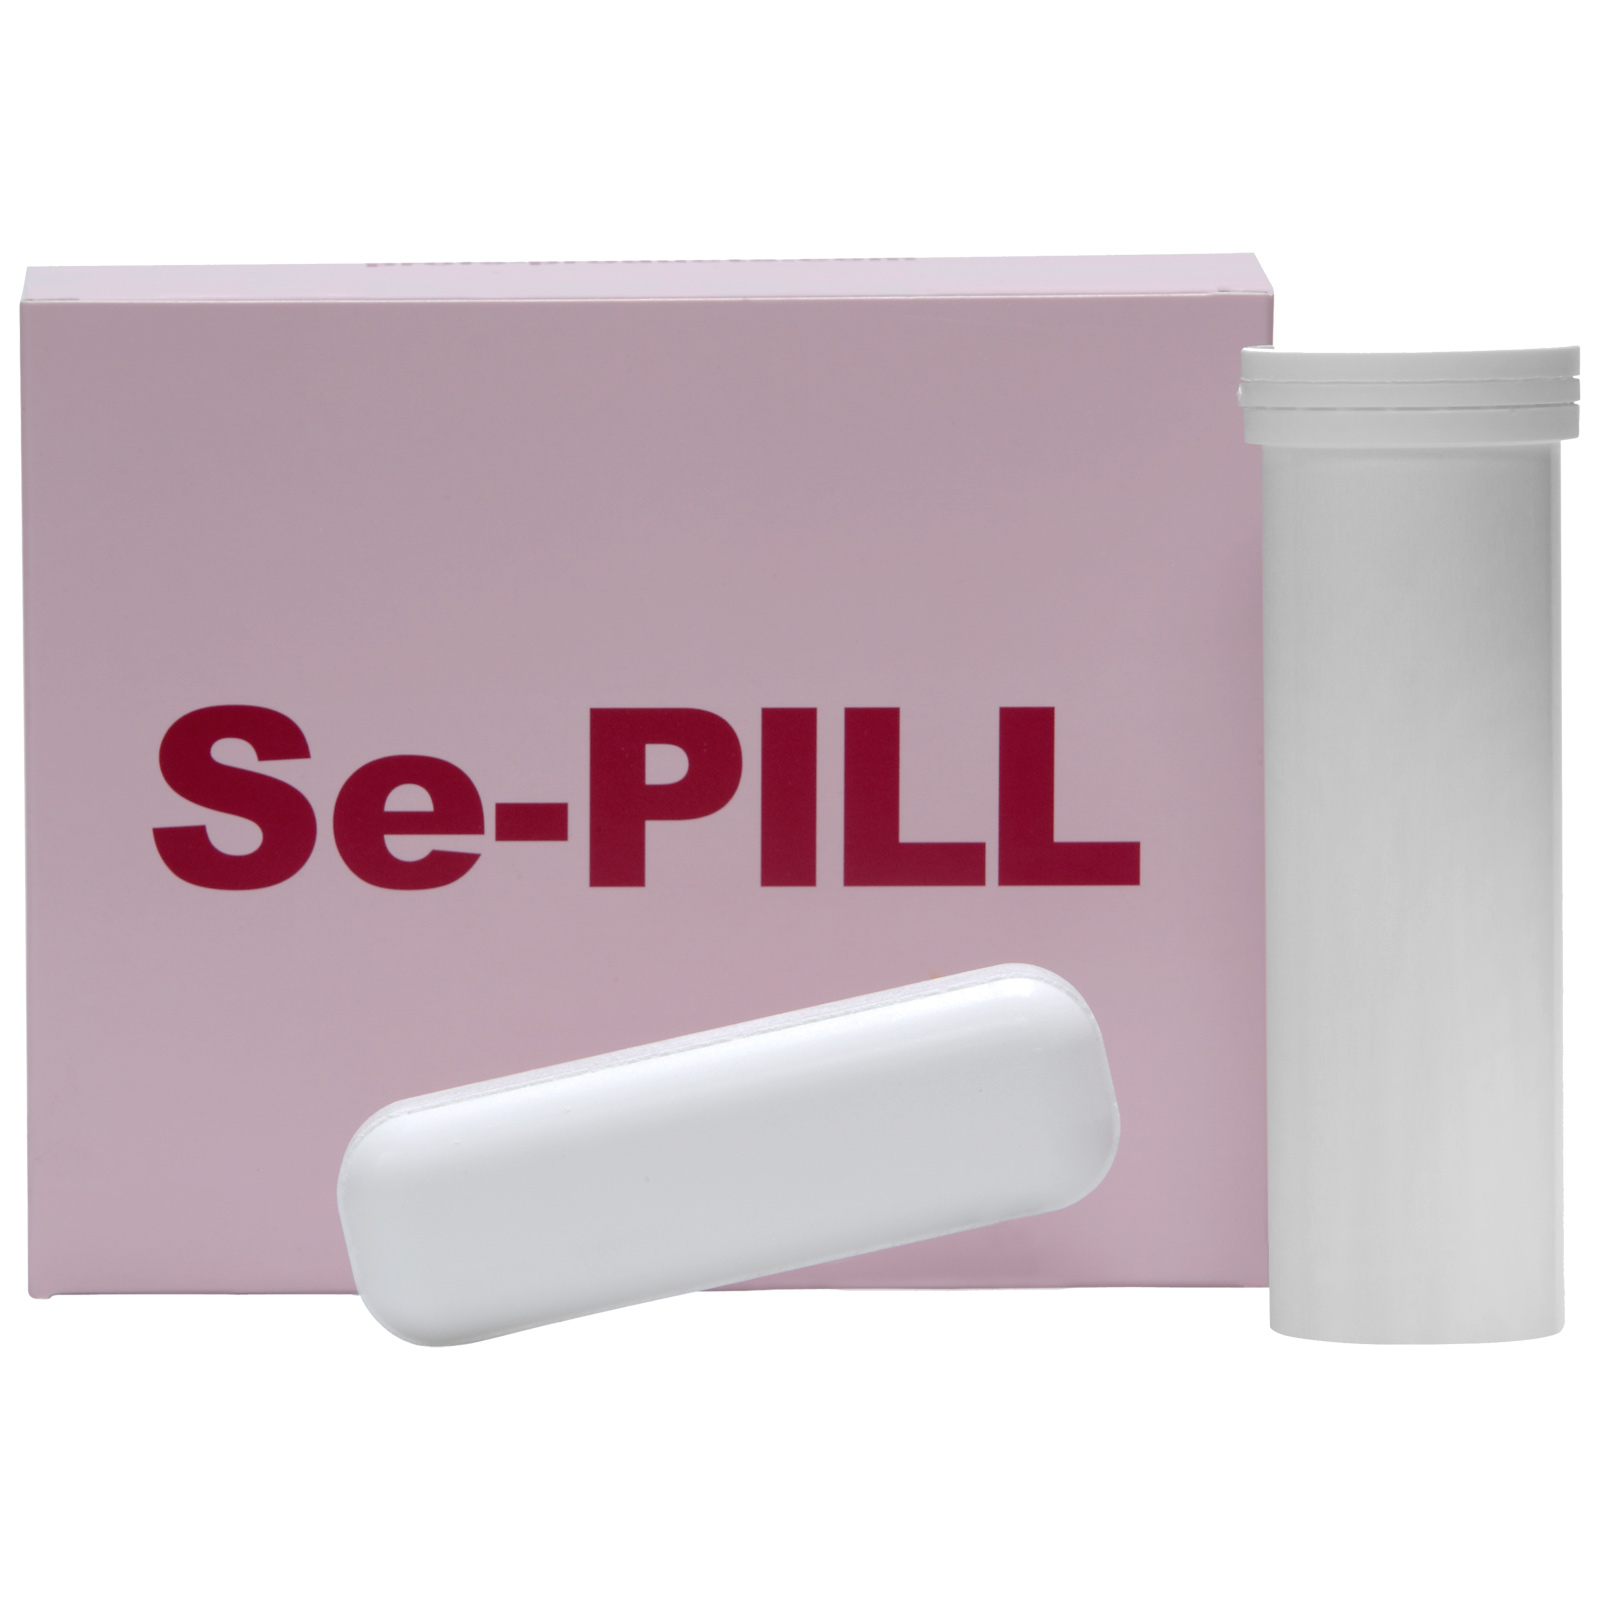 Se-PILL against selenium deficiency 4 x 80 g